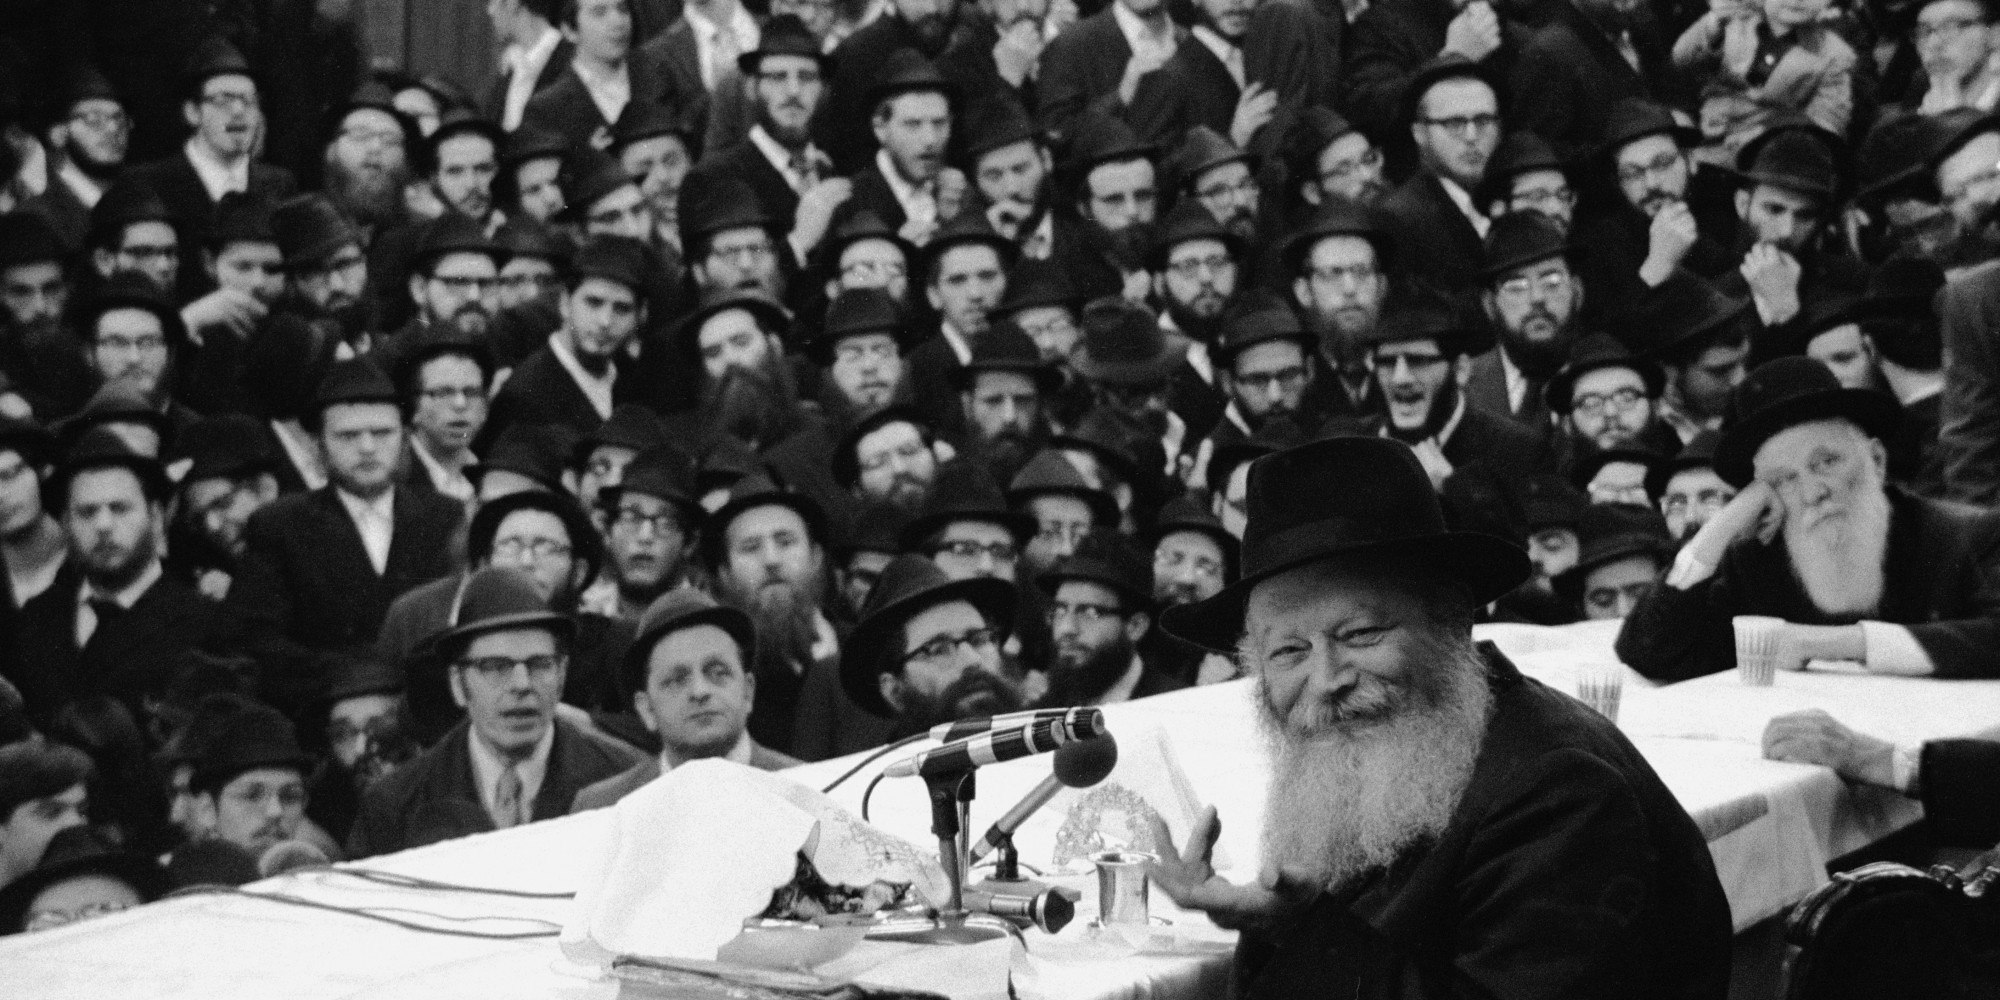 Rabbi Schneerson Gives A Talk